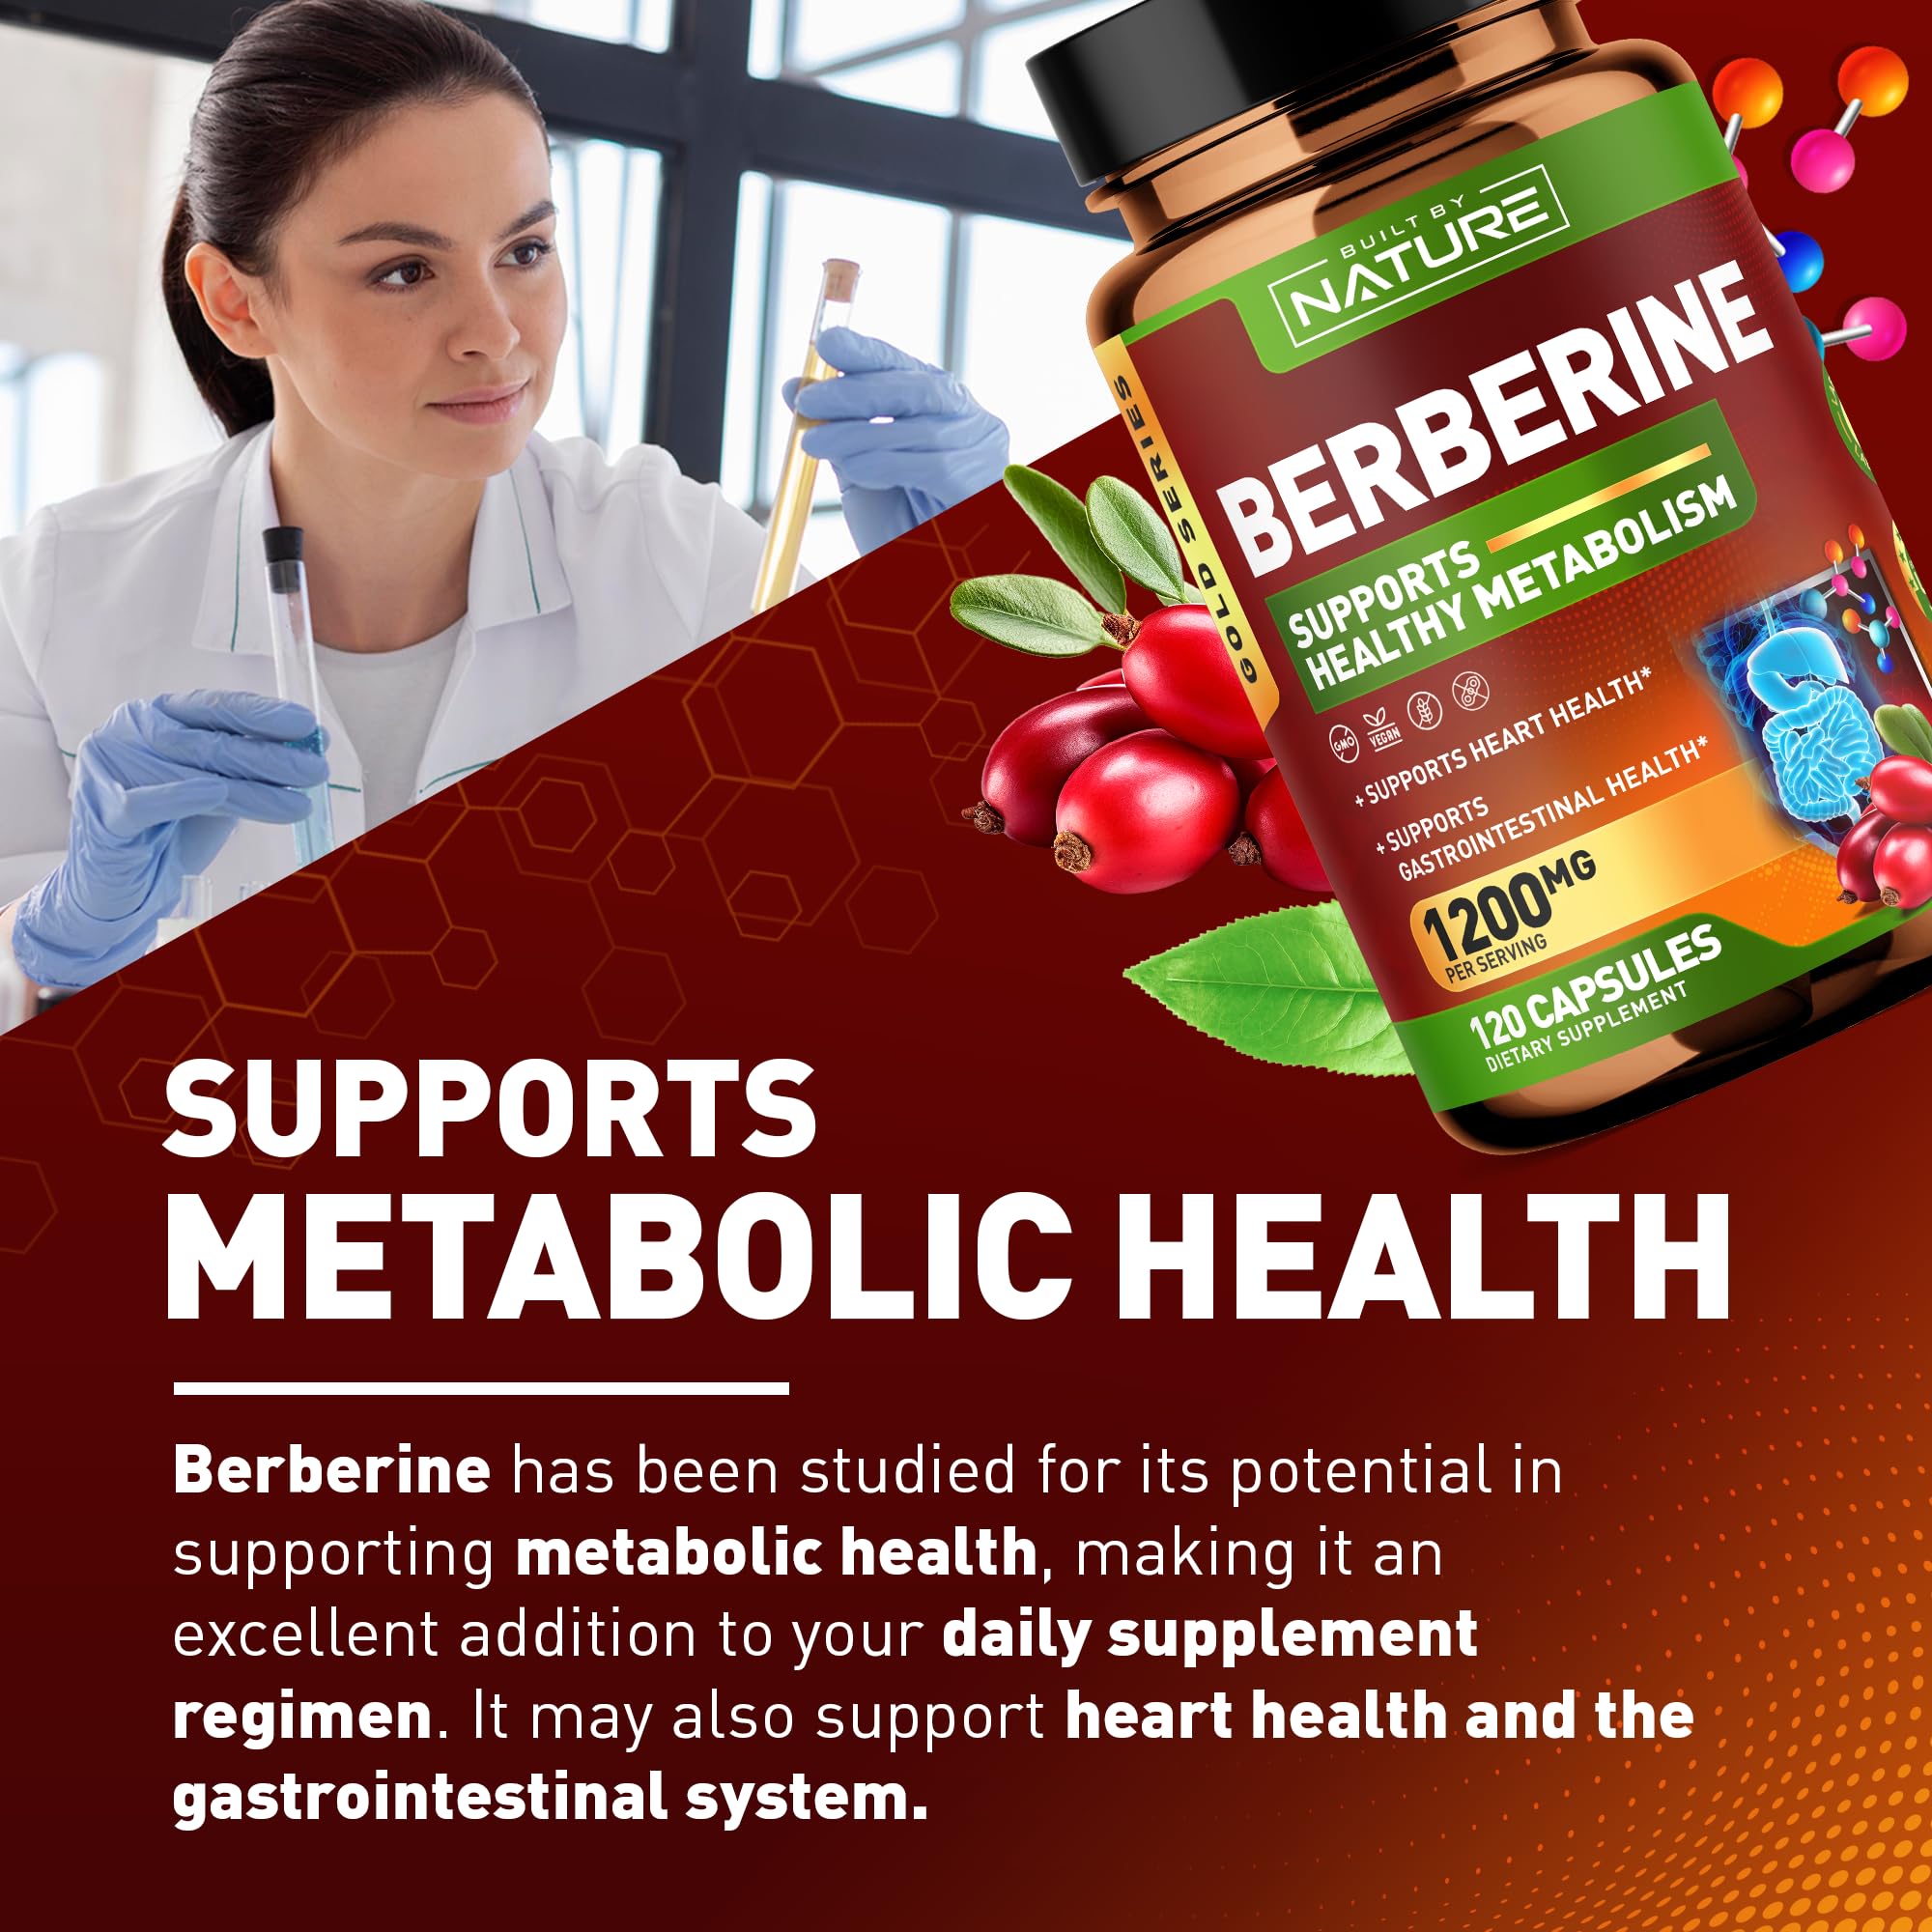 Berberine 1200mg - 100% Pure Berberine HCl Supplement, High Strength Berberine, Natural Support for Metabolic, Heart and Gastrointestinal Health, Non-GMO, Gluten Free, Vegan, 120 Veggie Capsules